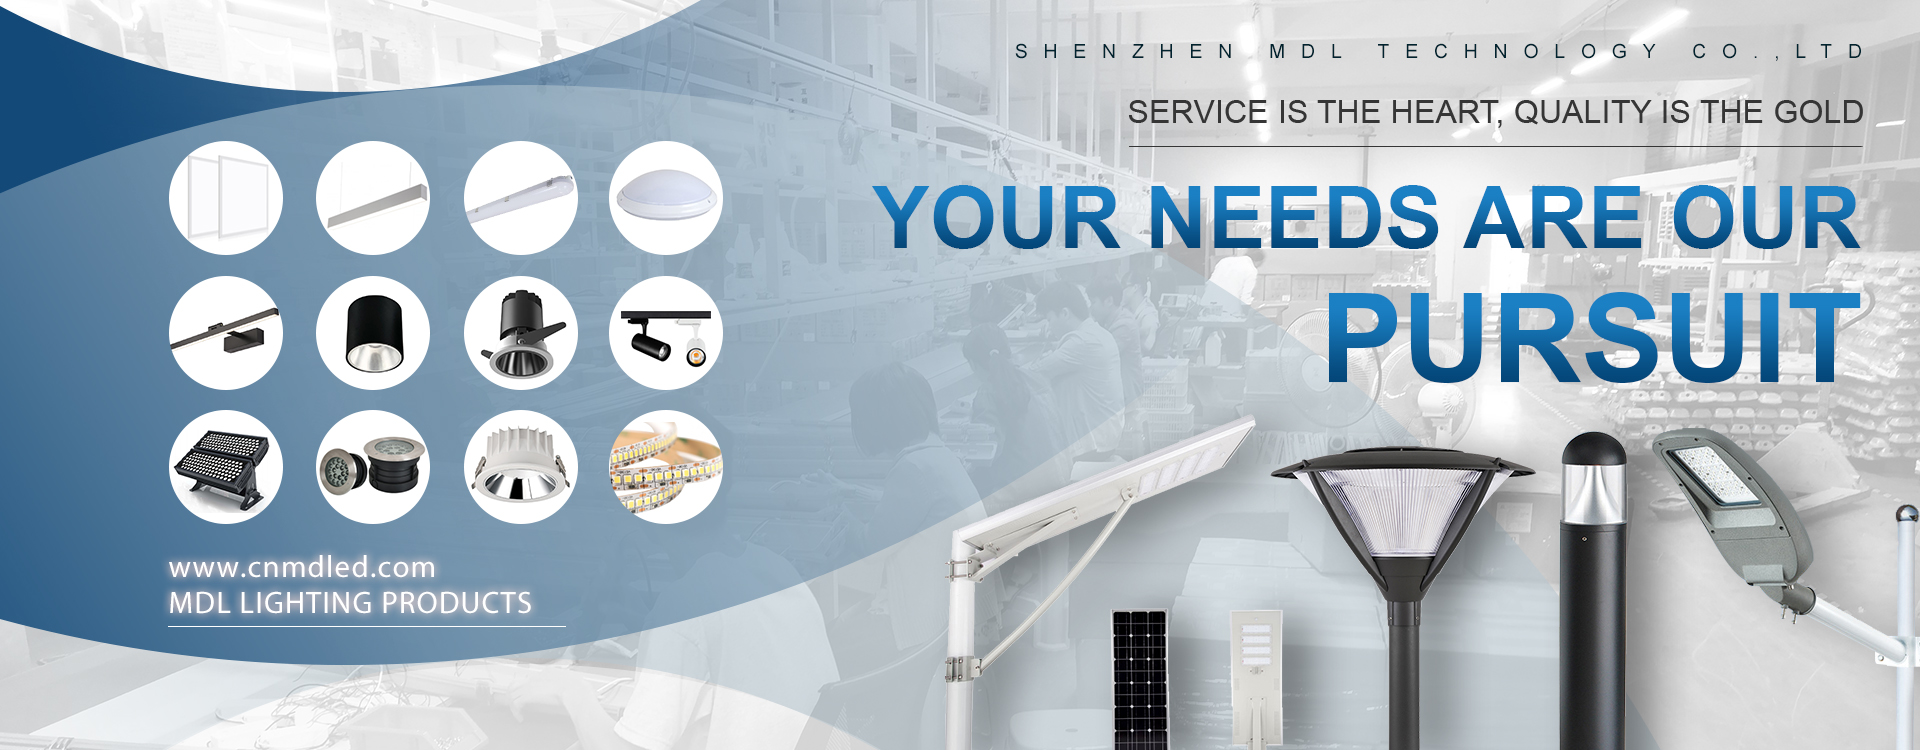 ShenZhen MDL Technology Co., Ltd